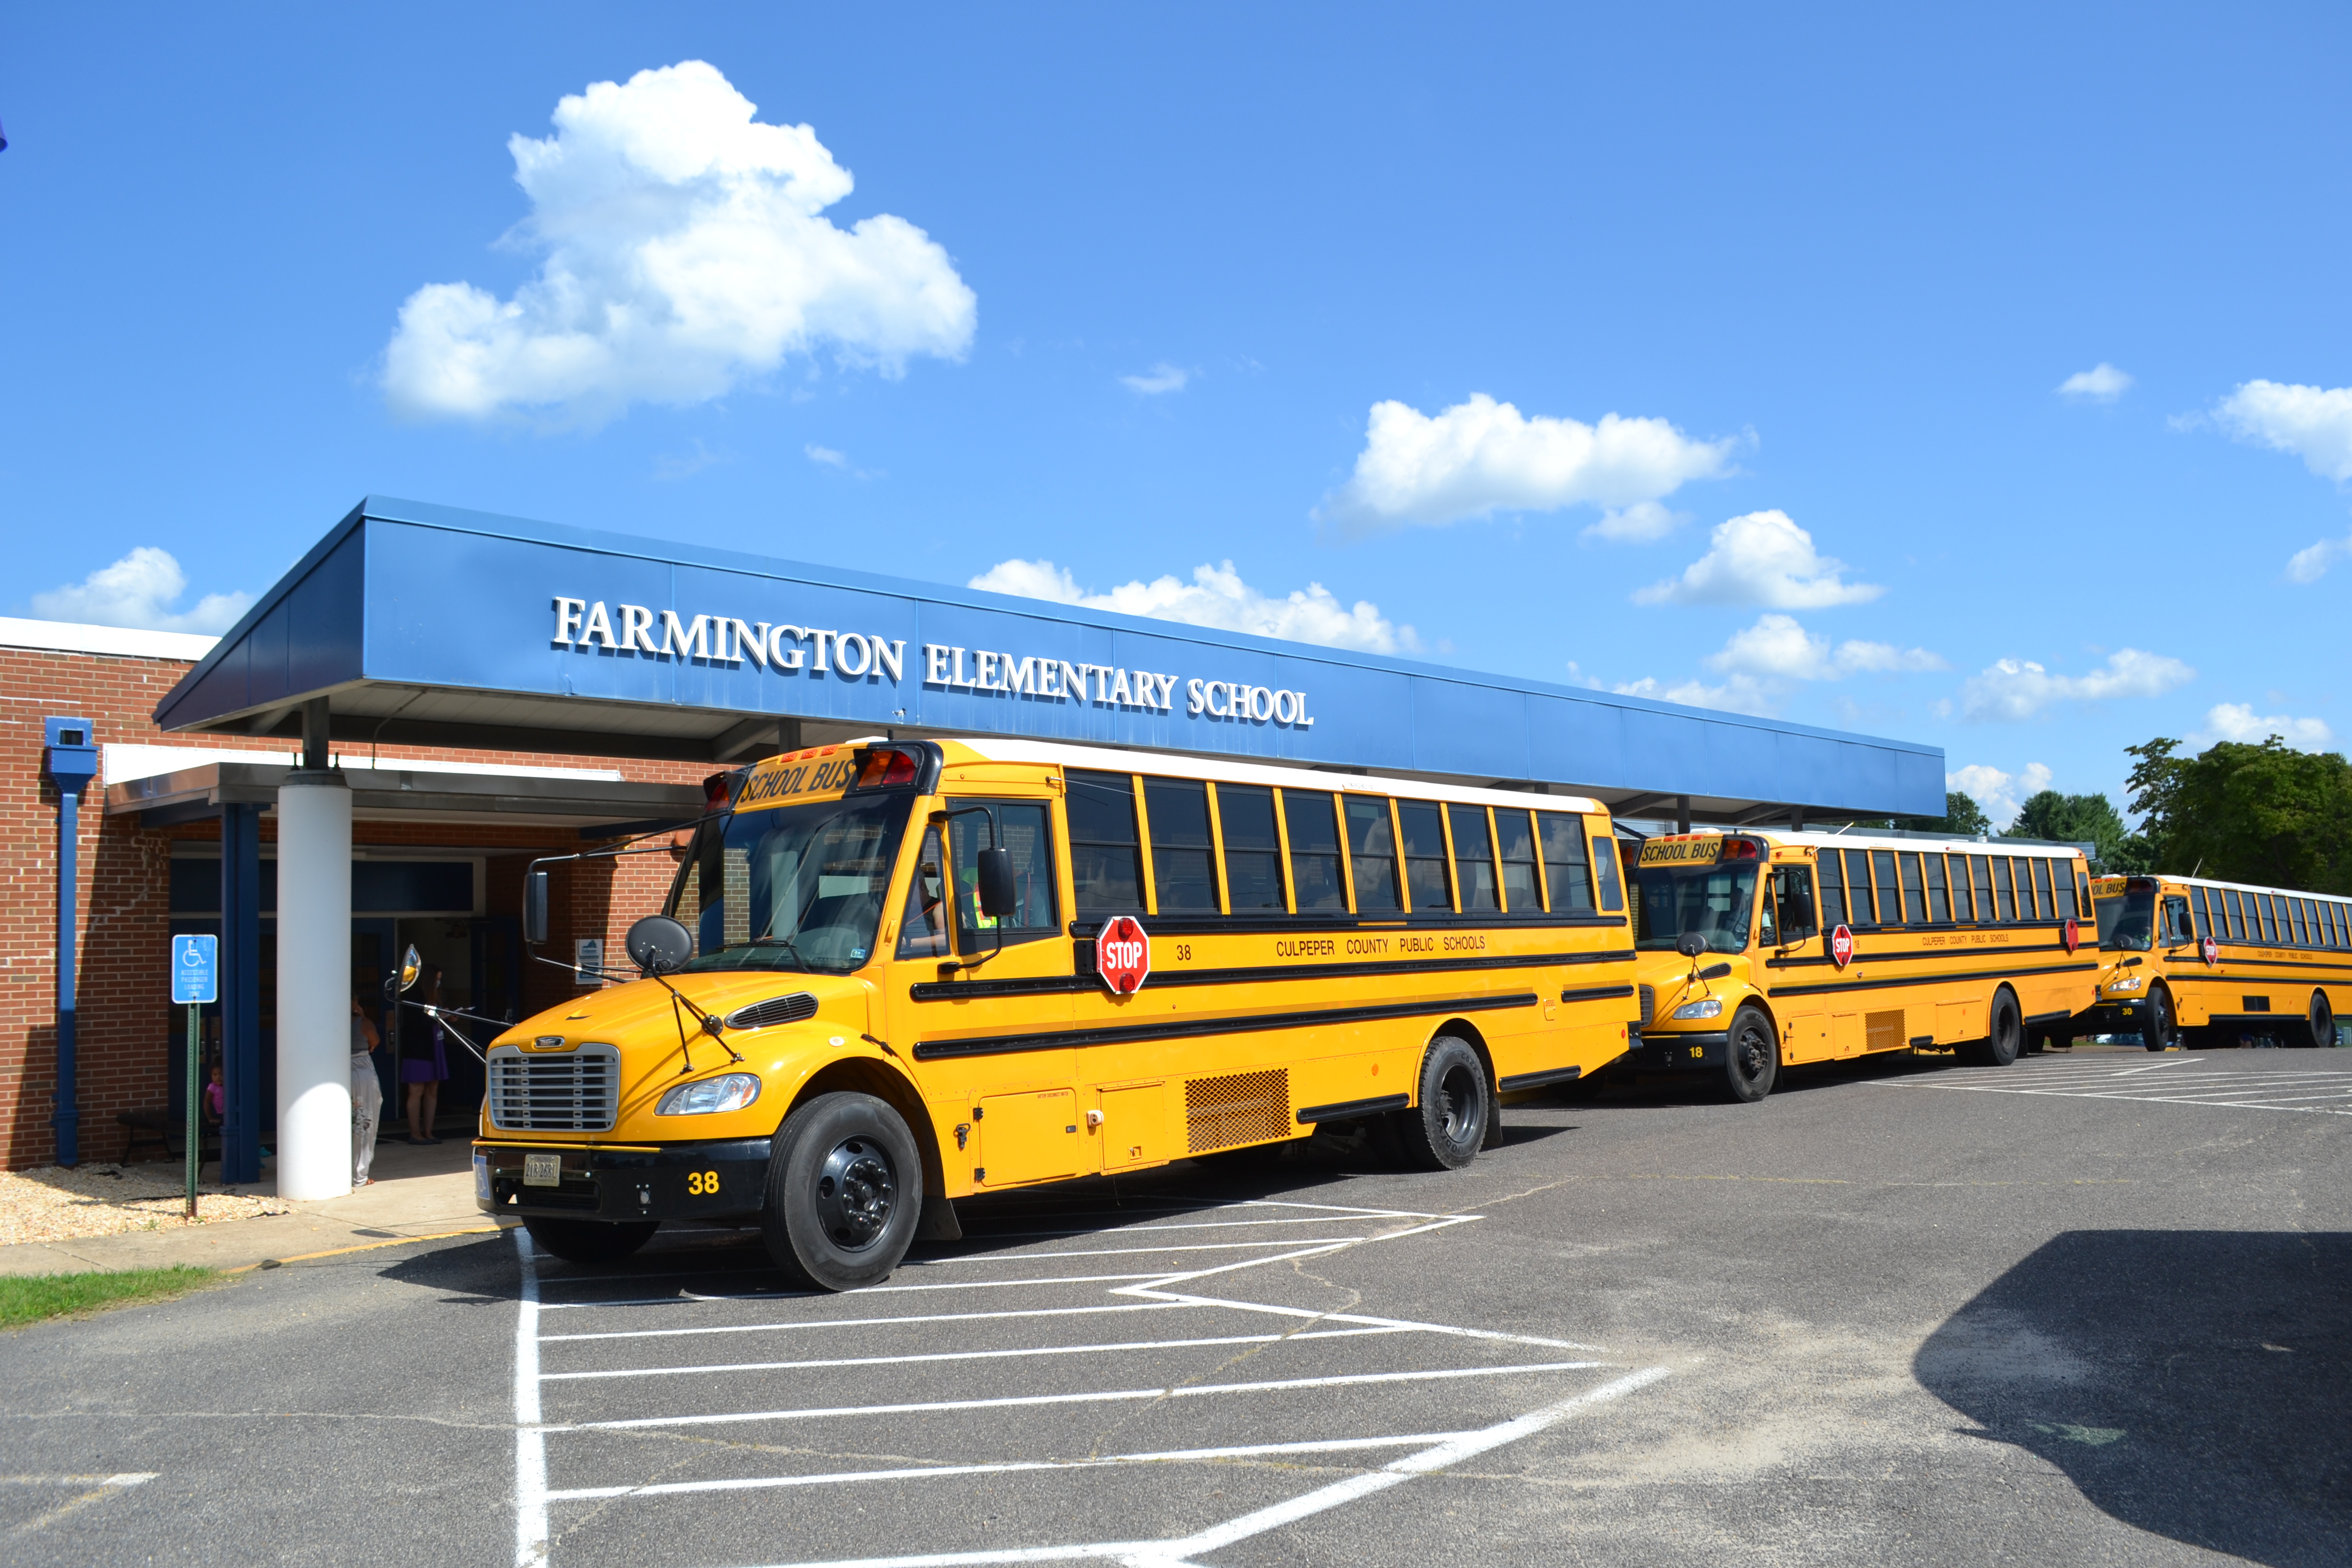 Farmington Elementary School